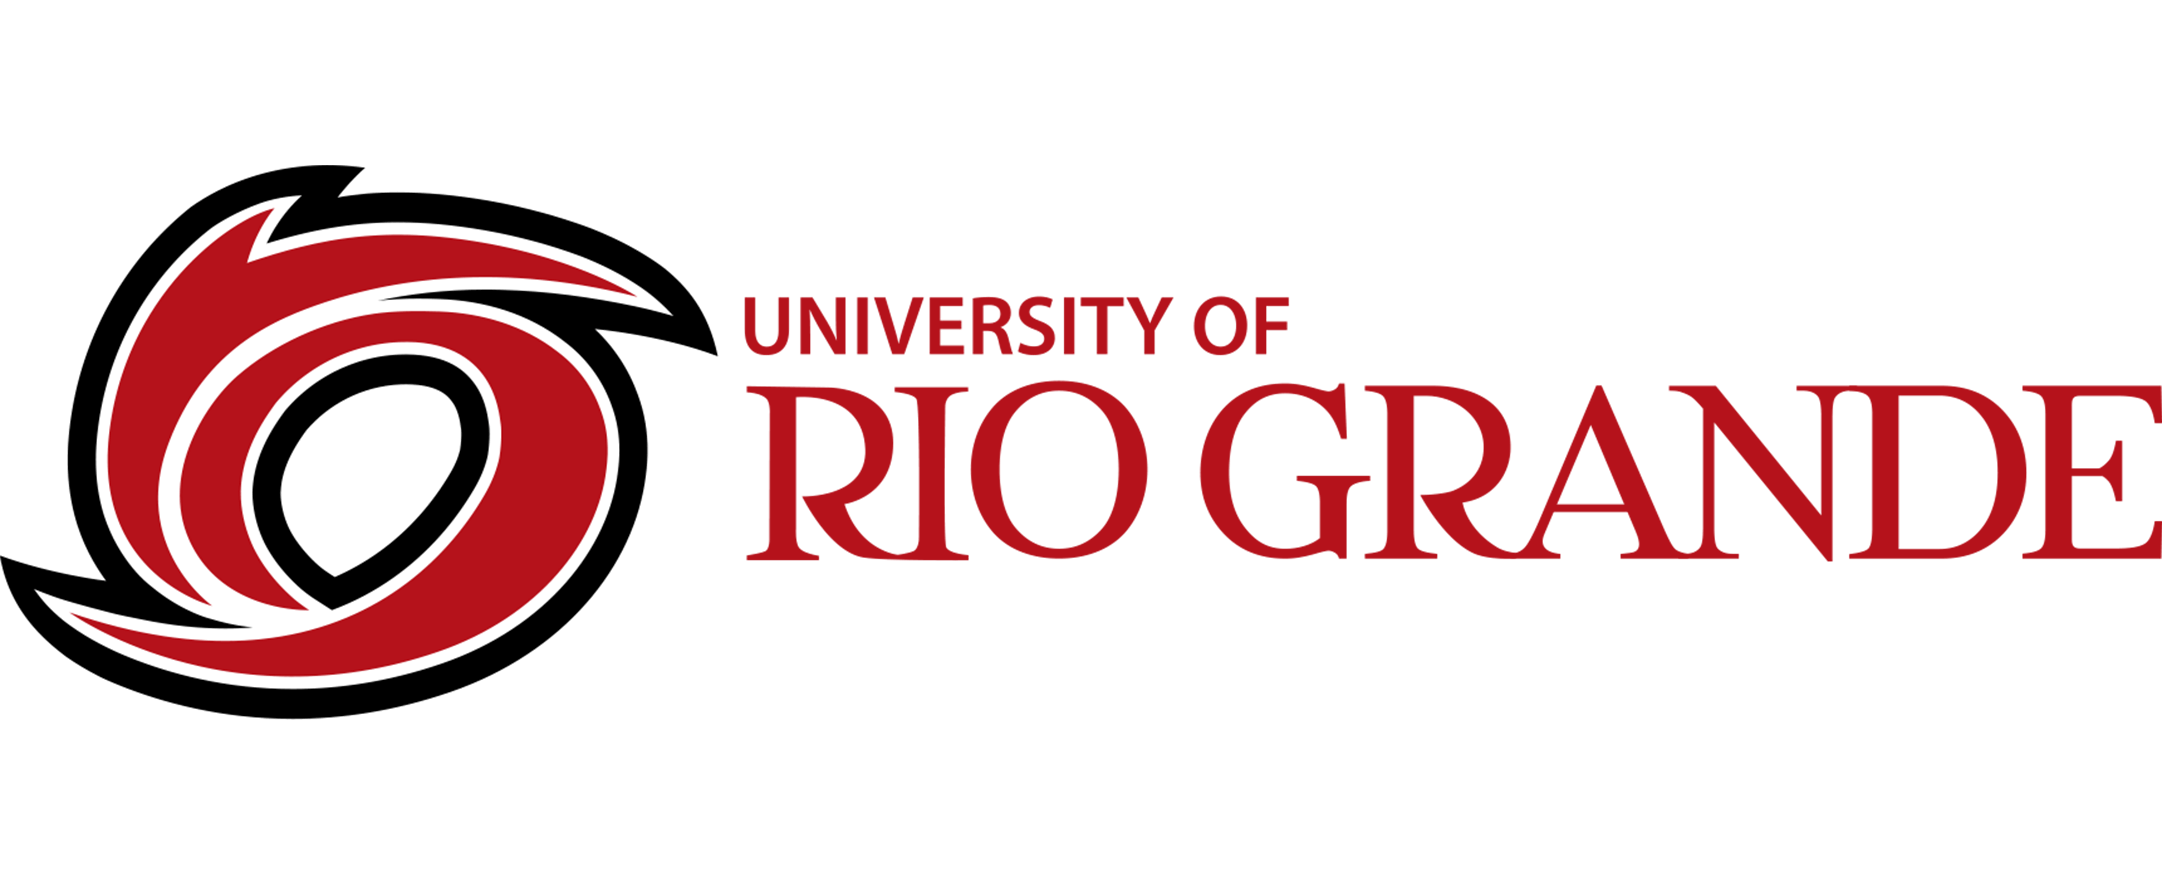 University of Rio Grande Logo - University of Rio Grande. Midwest Student Exchange Program